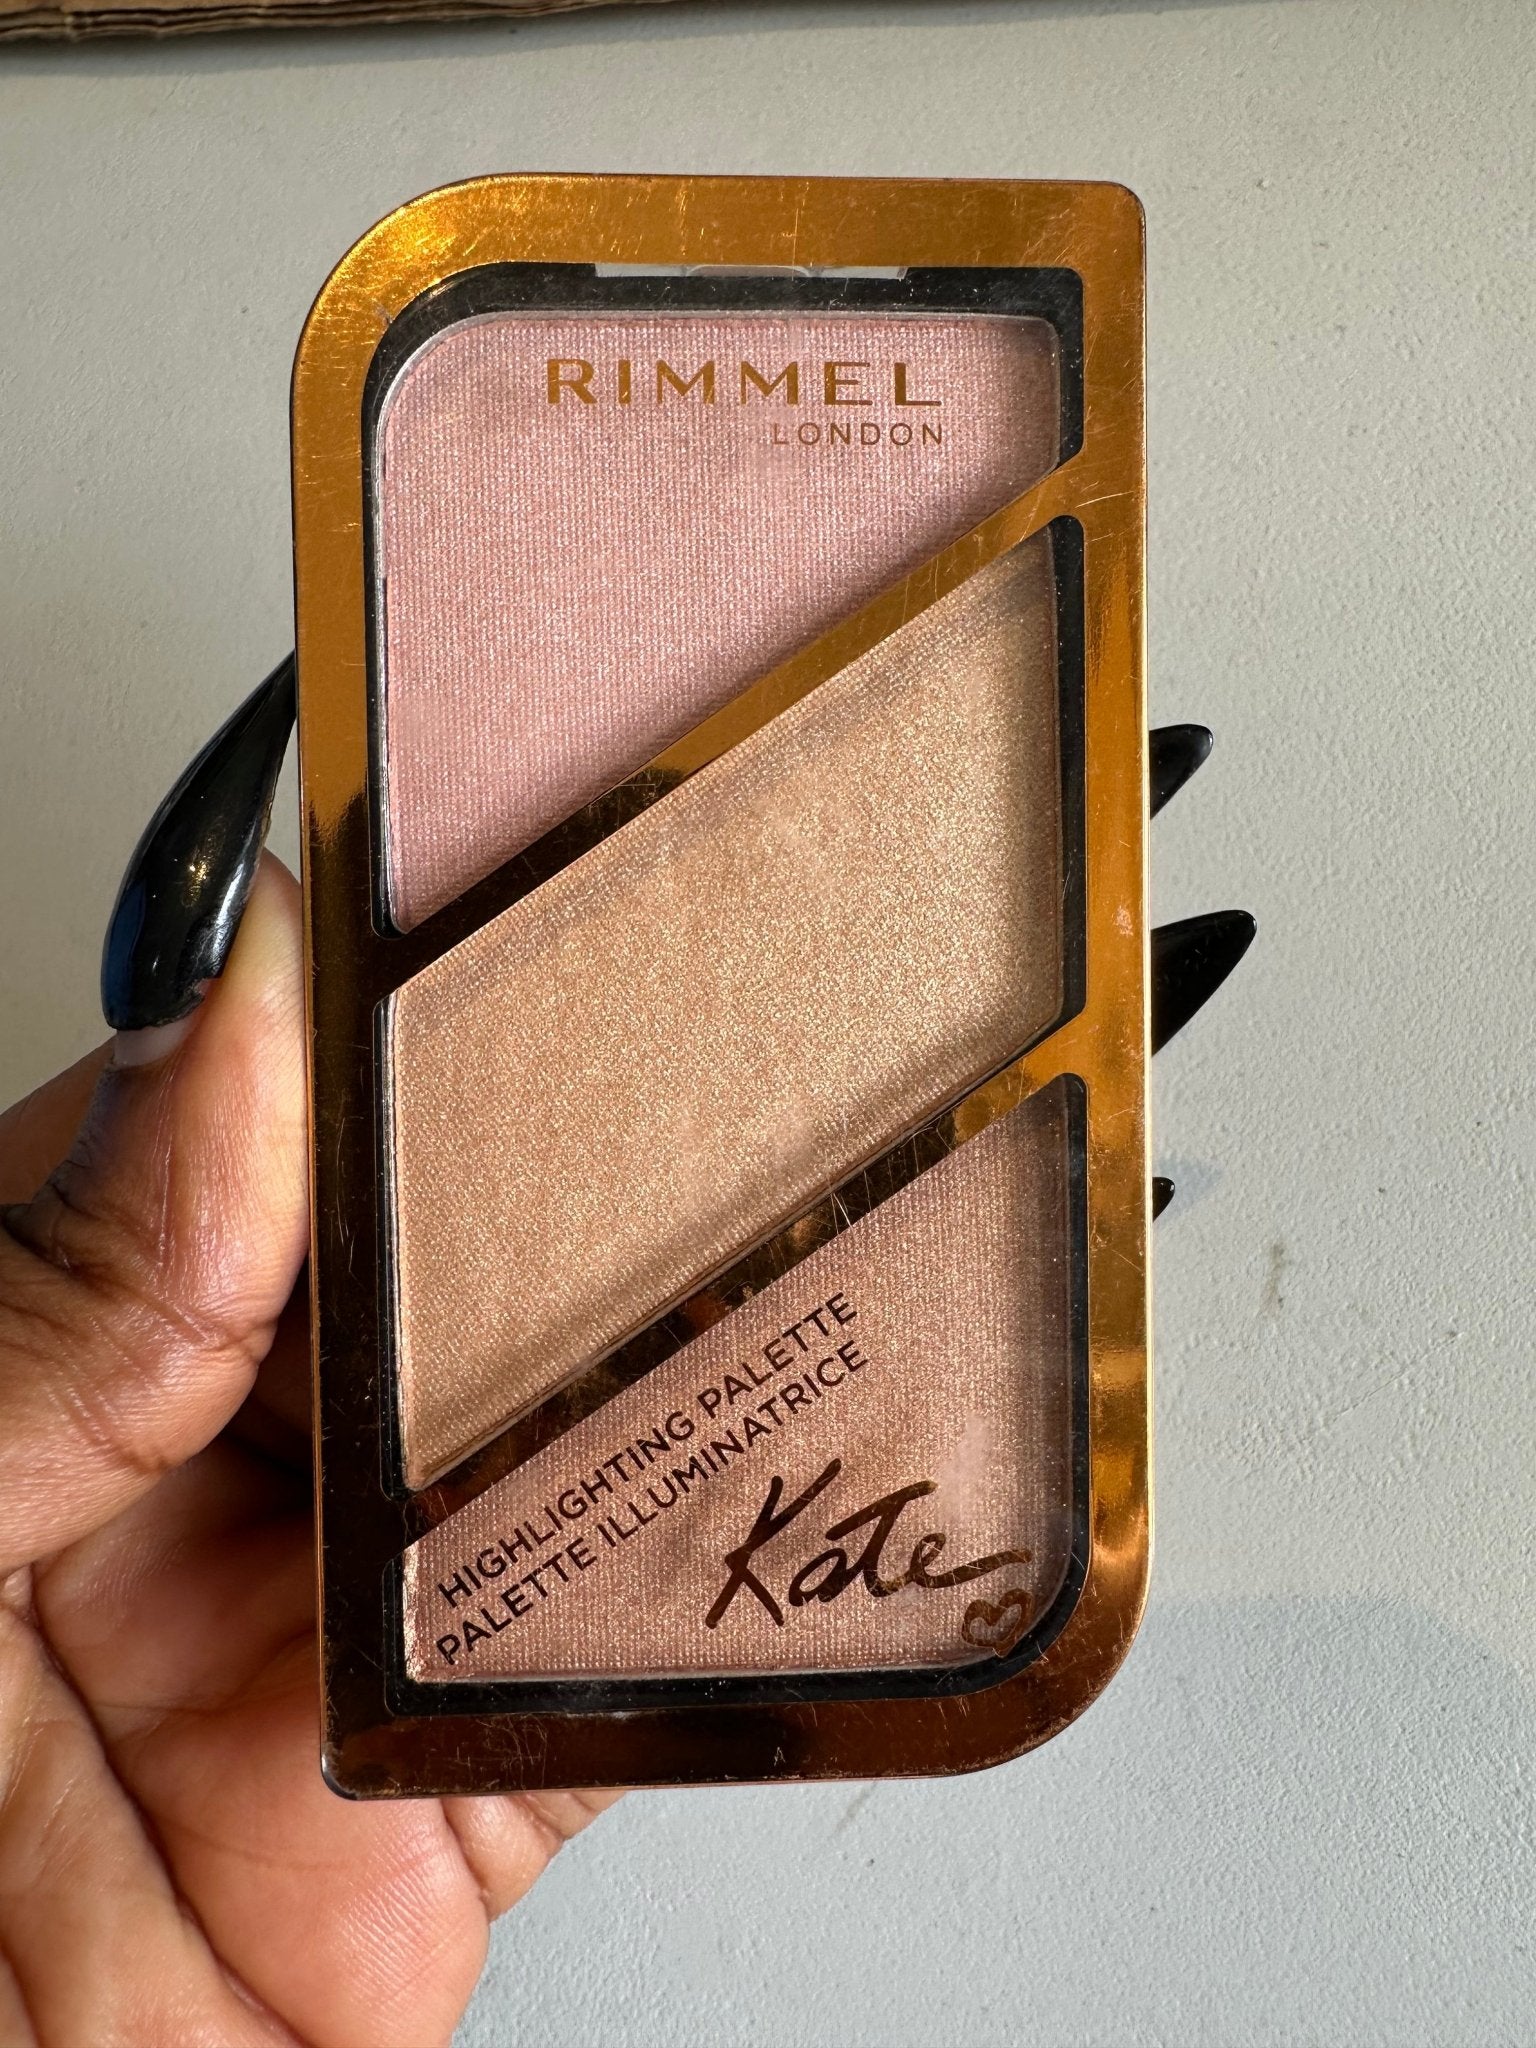 Rimmel 3-Shades Highlighting Palette - Ome's Beauty Mart